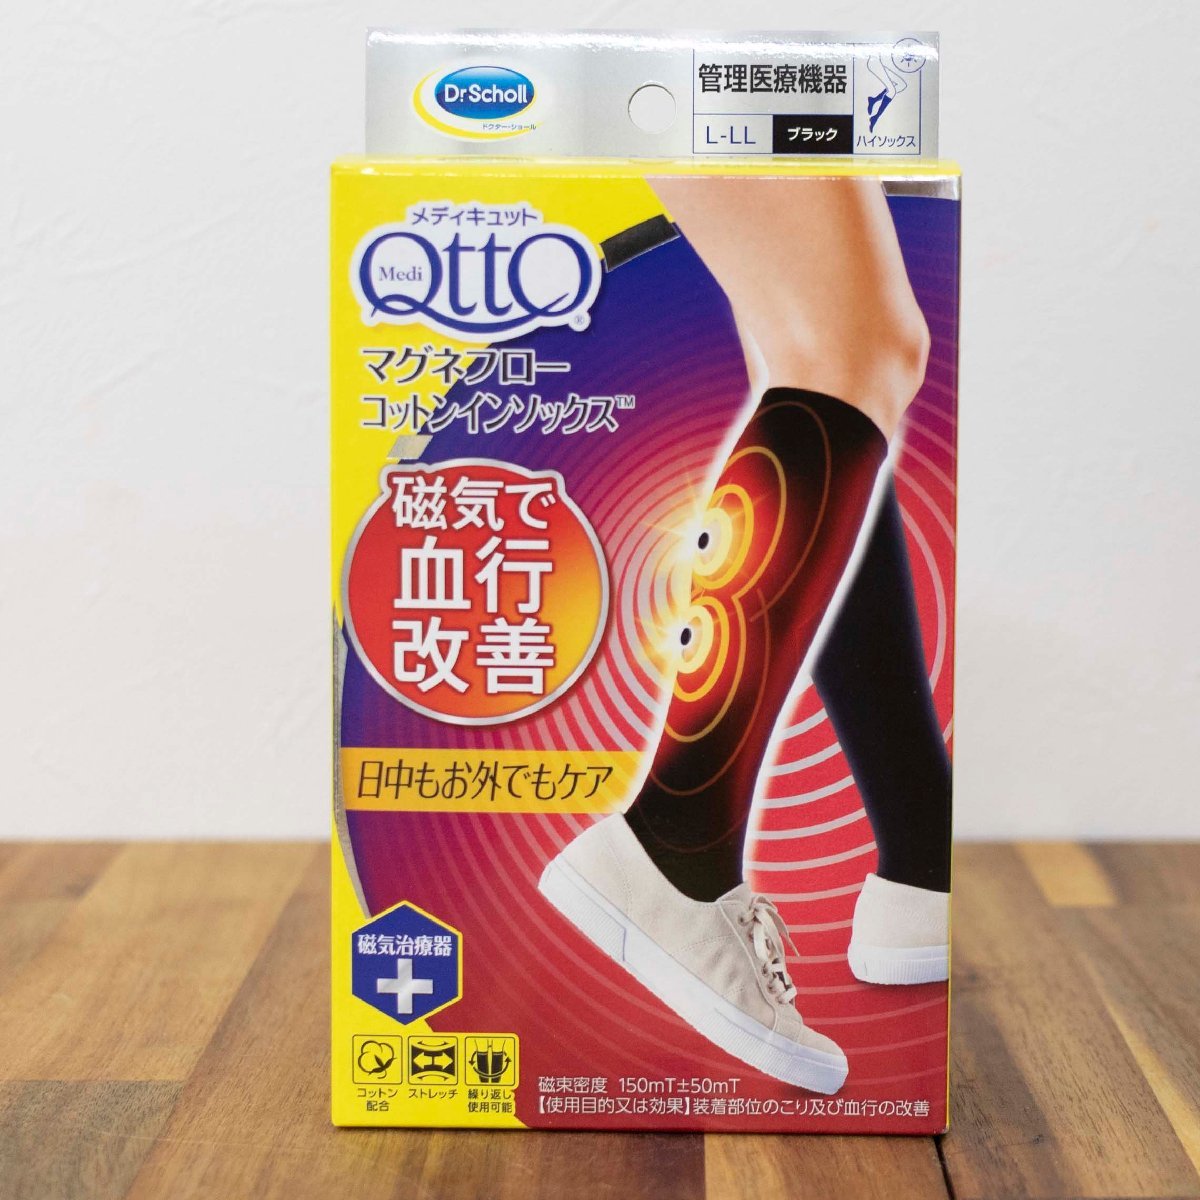 metikyuto Magne flow cotton in socks black knee-high socks L-LL unused goods 